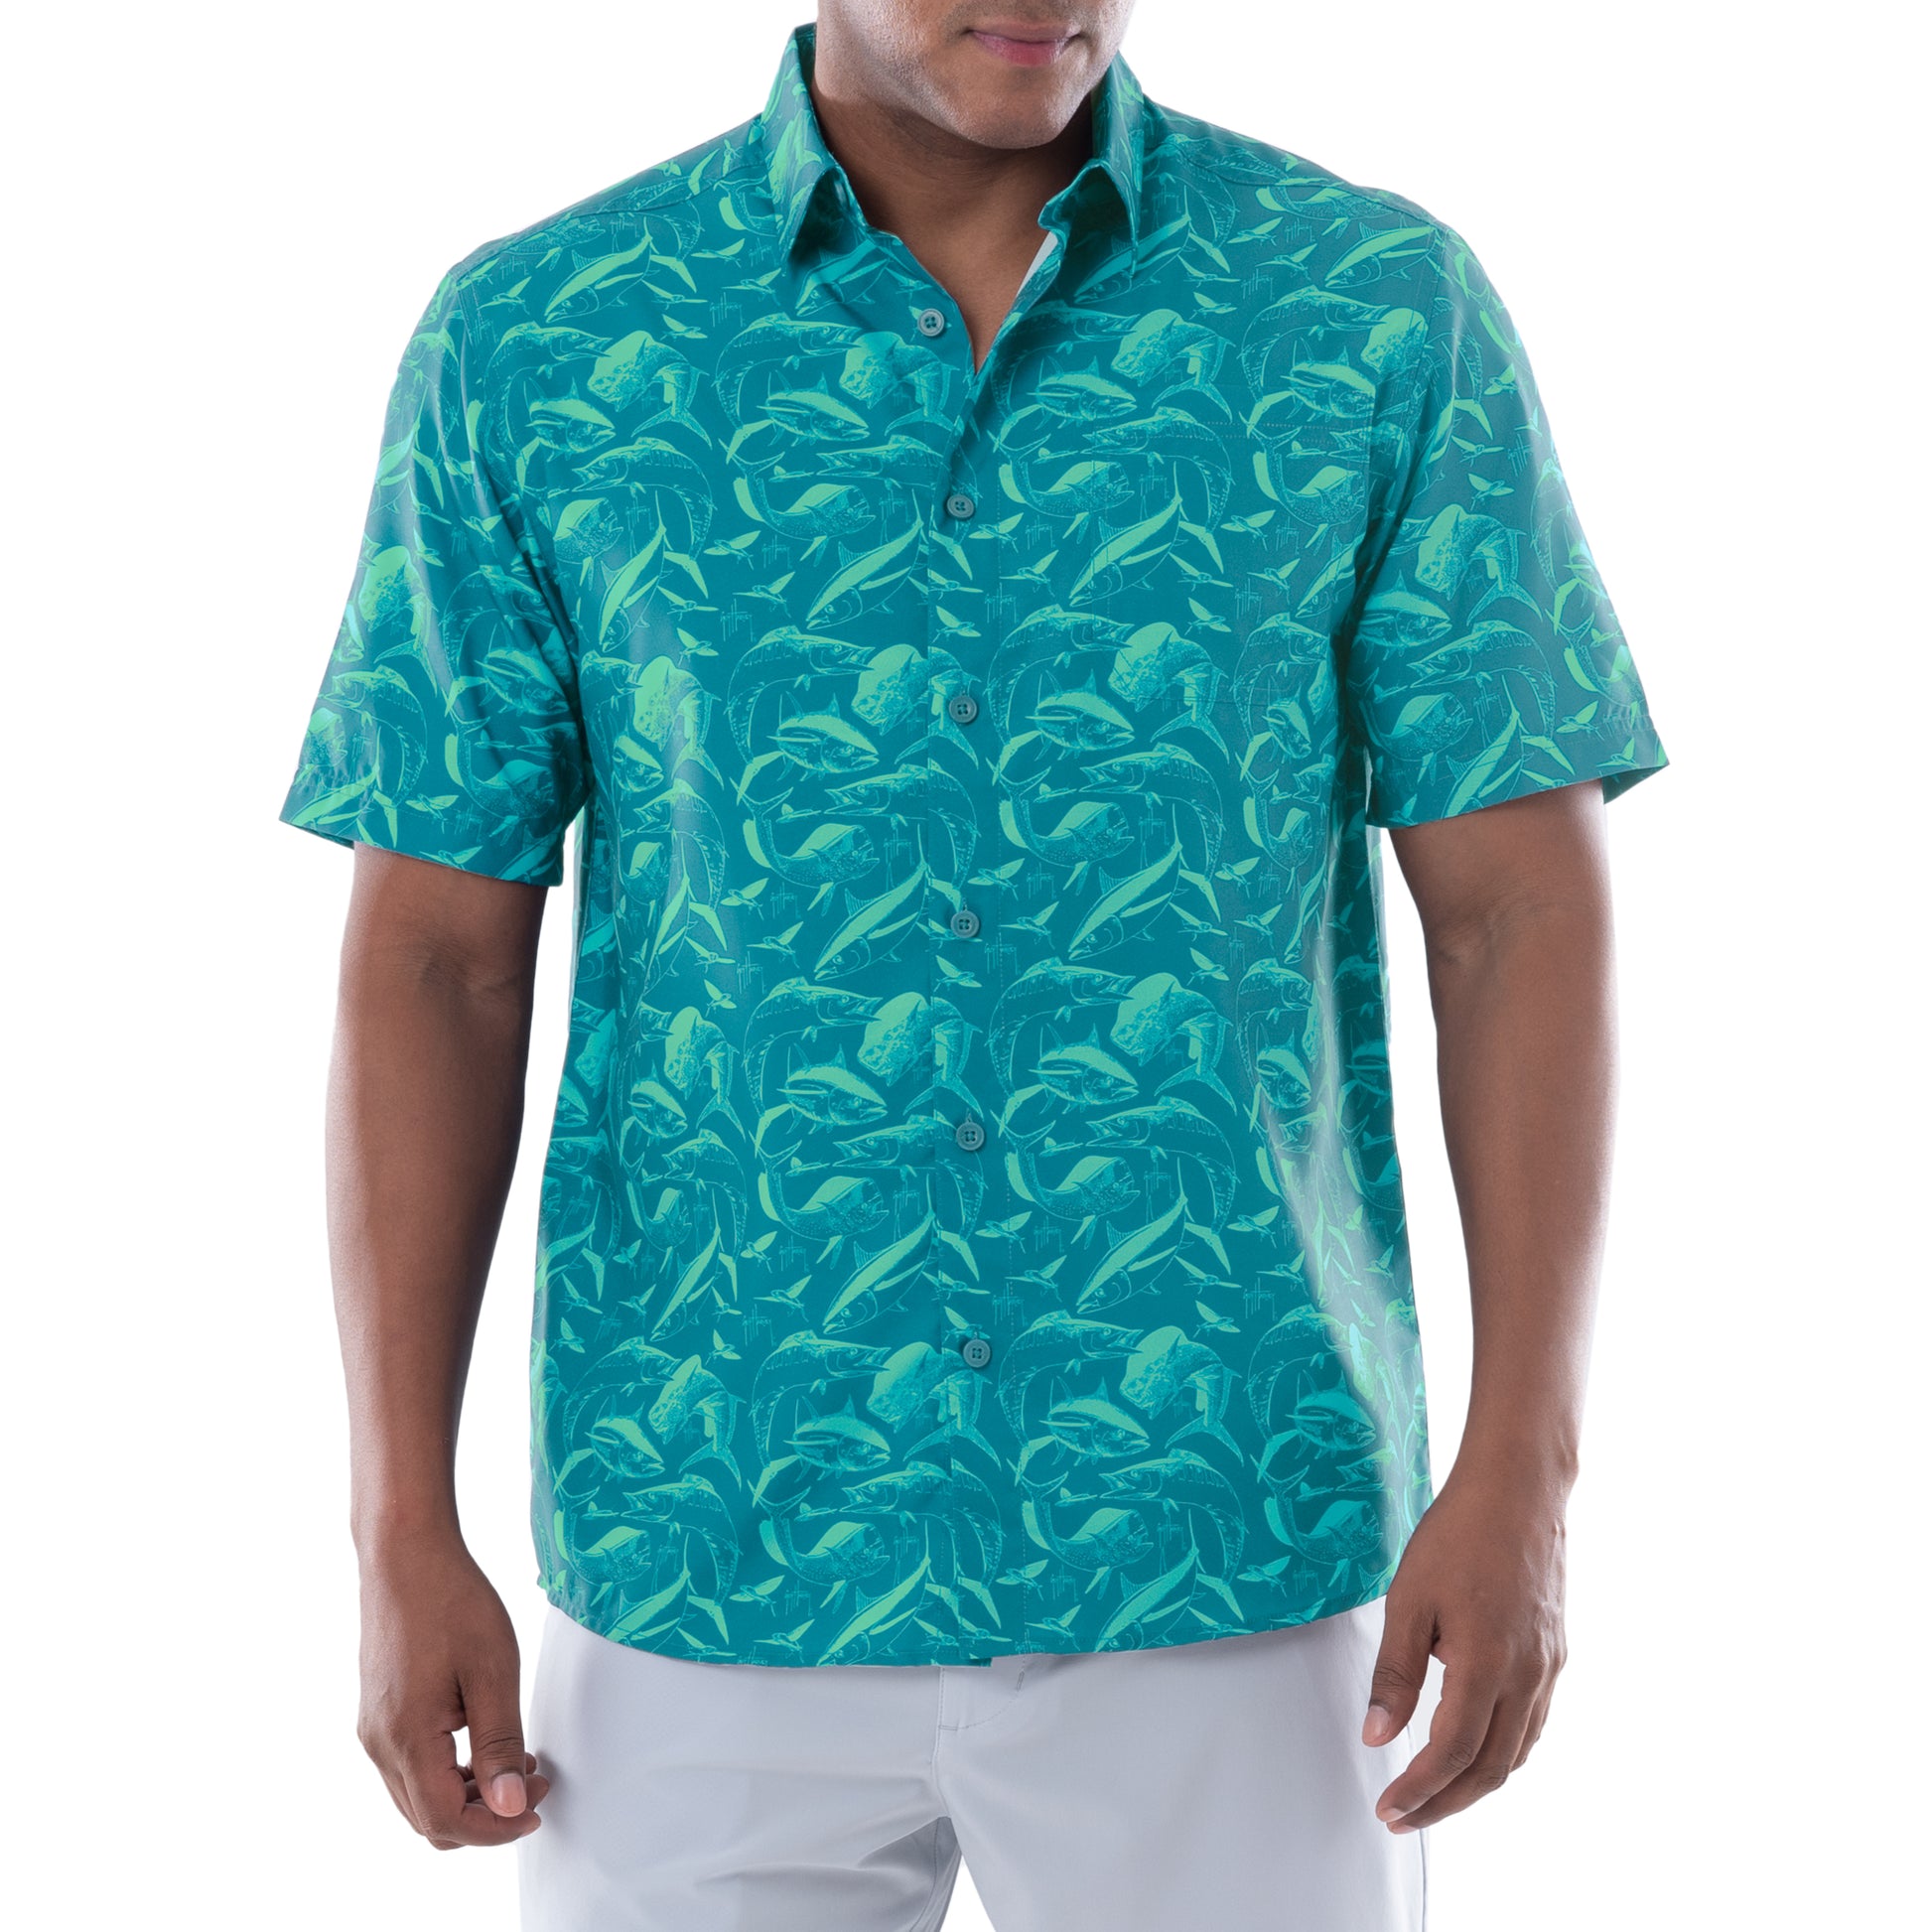 Monogram Sea Turtle Pattern Hawaiian Shirt For Men And Women